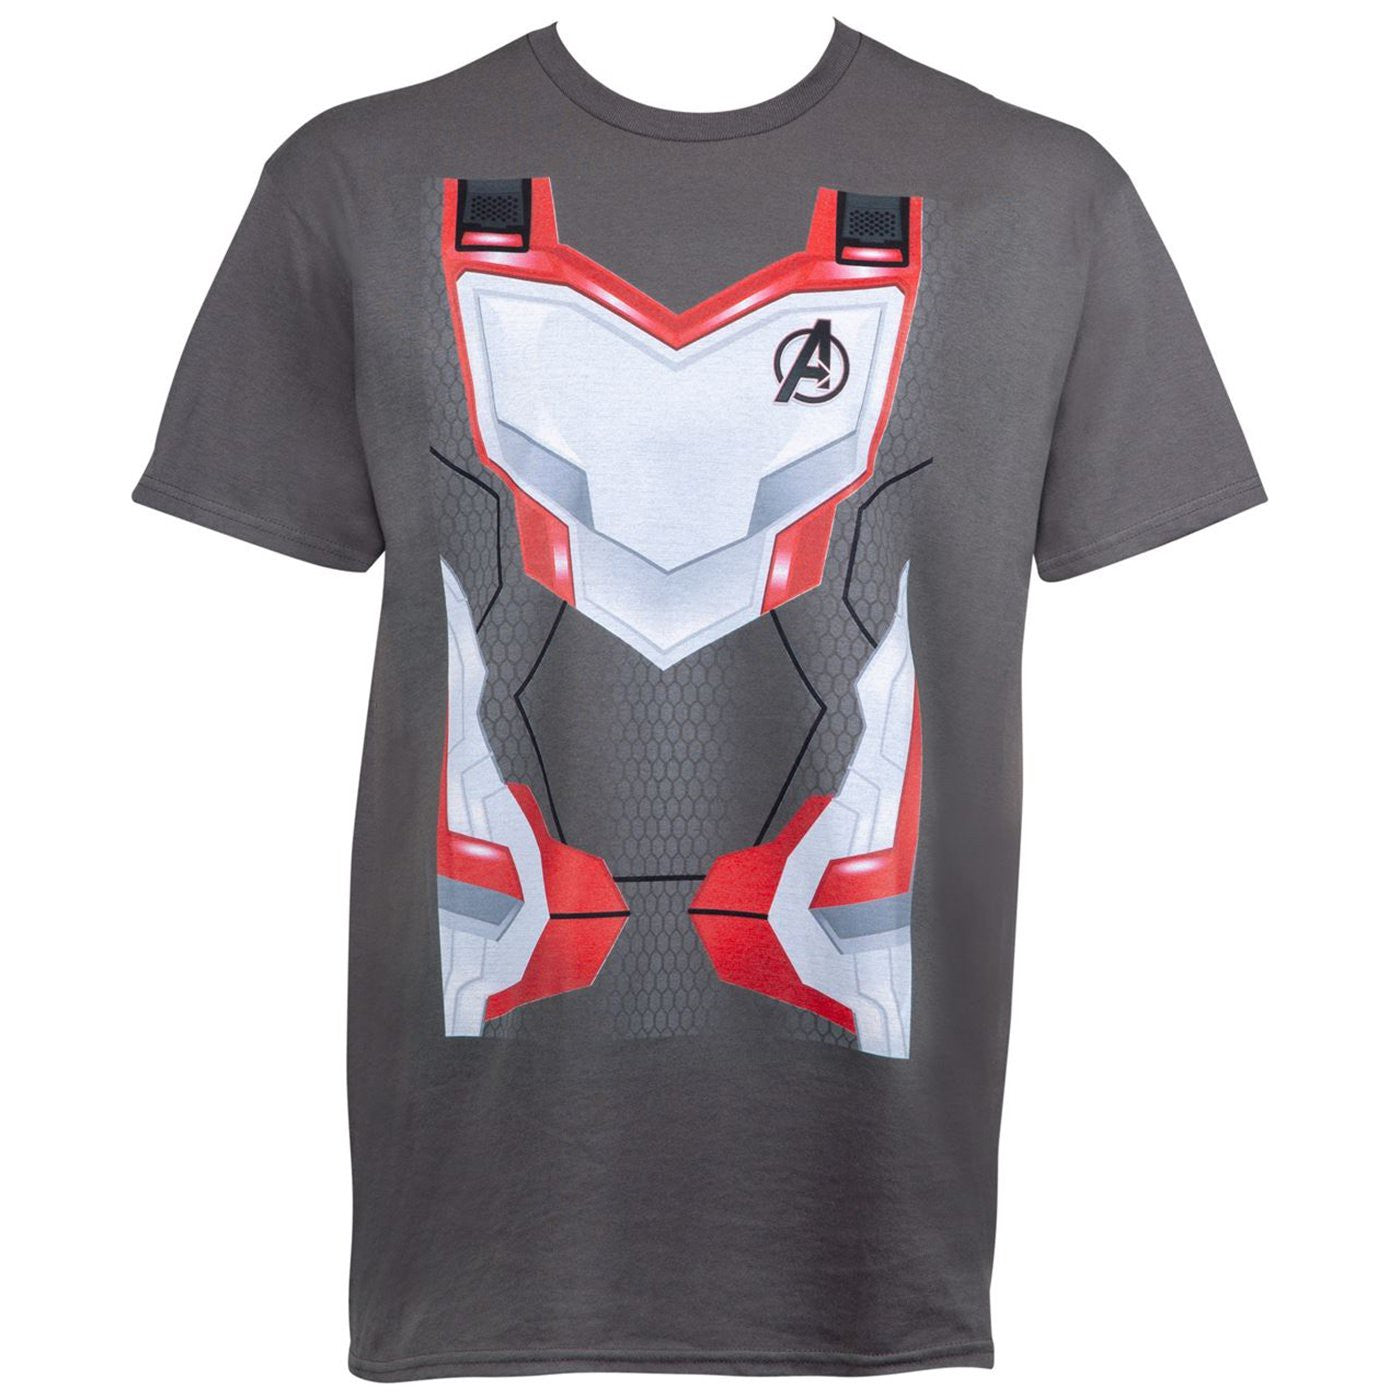 Avengers Endgame Quantum Armor Costume Men's T-Shirt